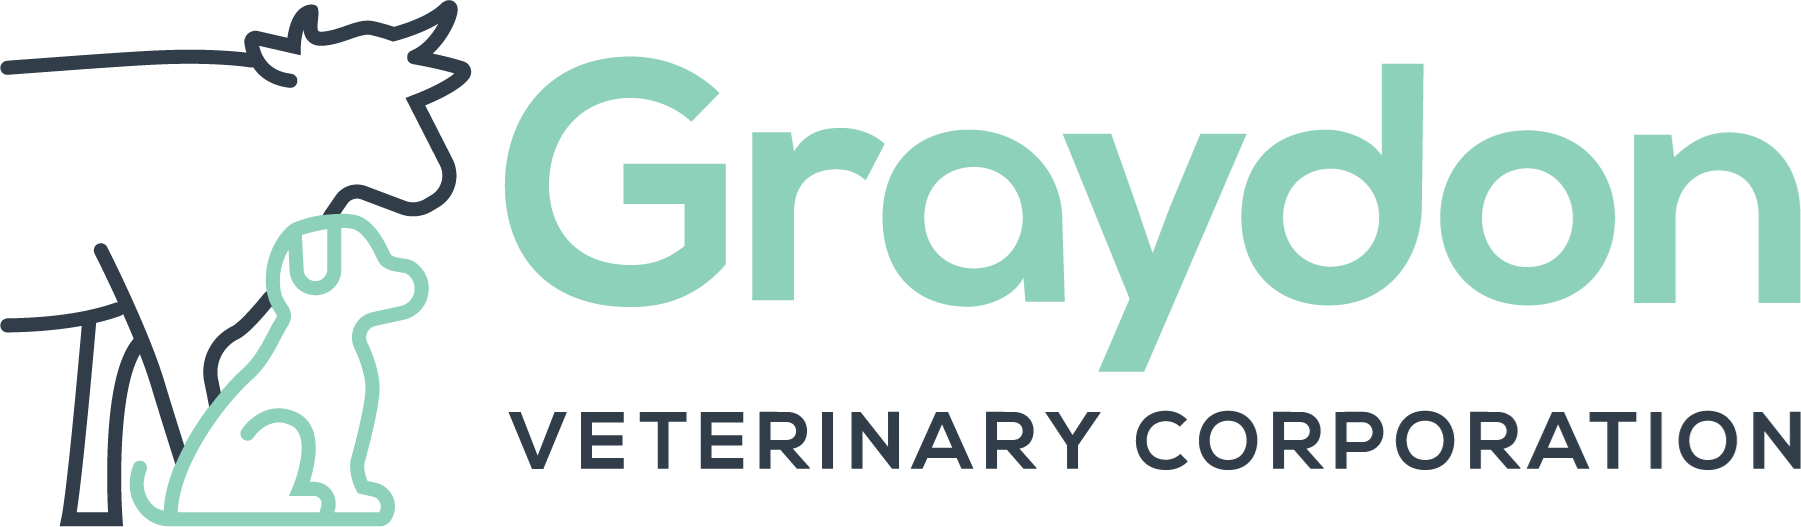 Graydon Veterinary Corporation